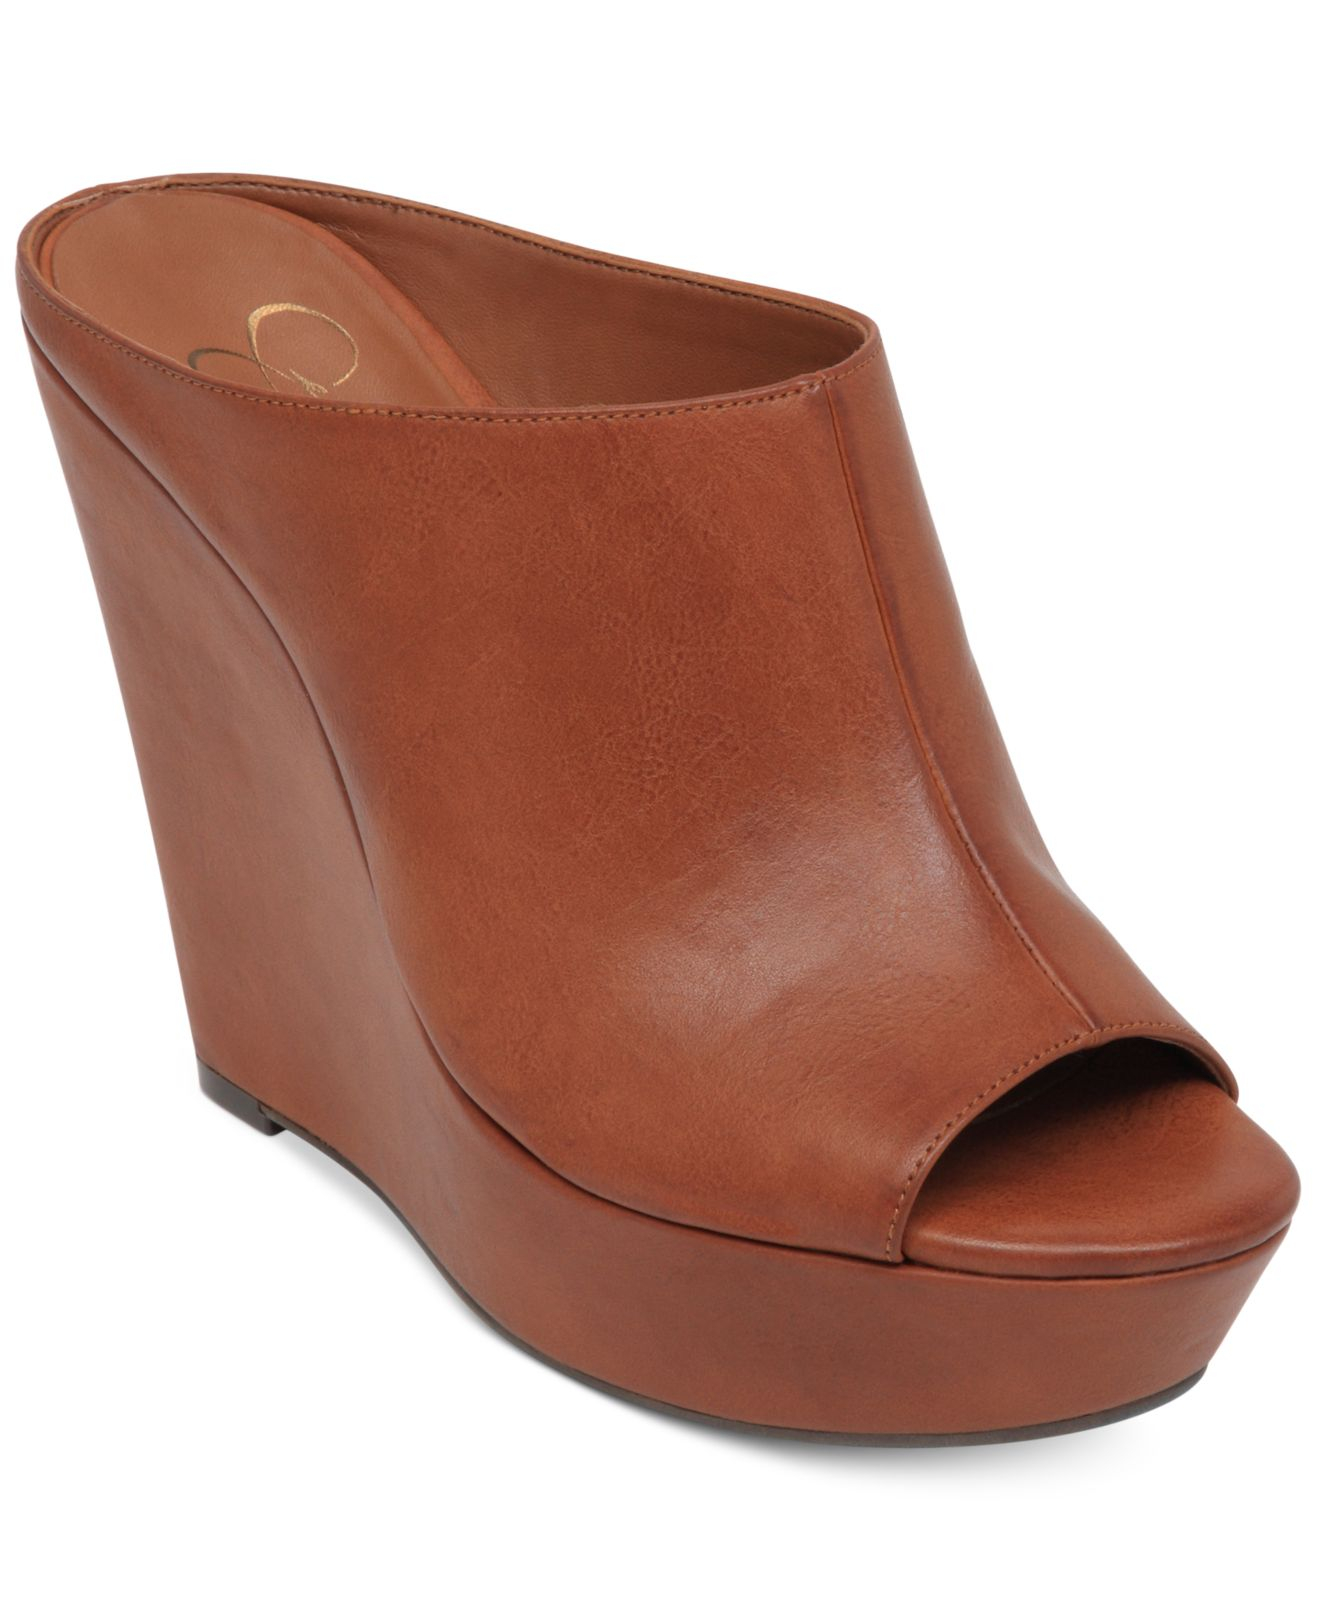 Lyst Jessica Simpson Lovell Platform Wedge Sandals  in Brown